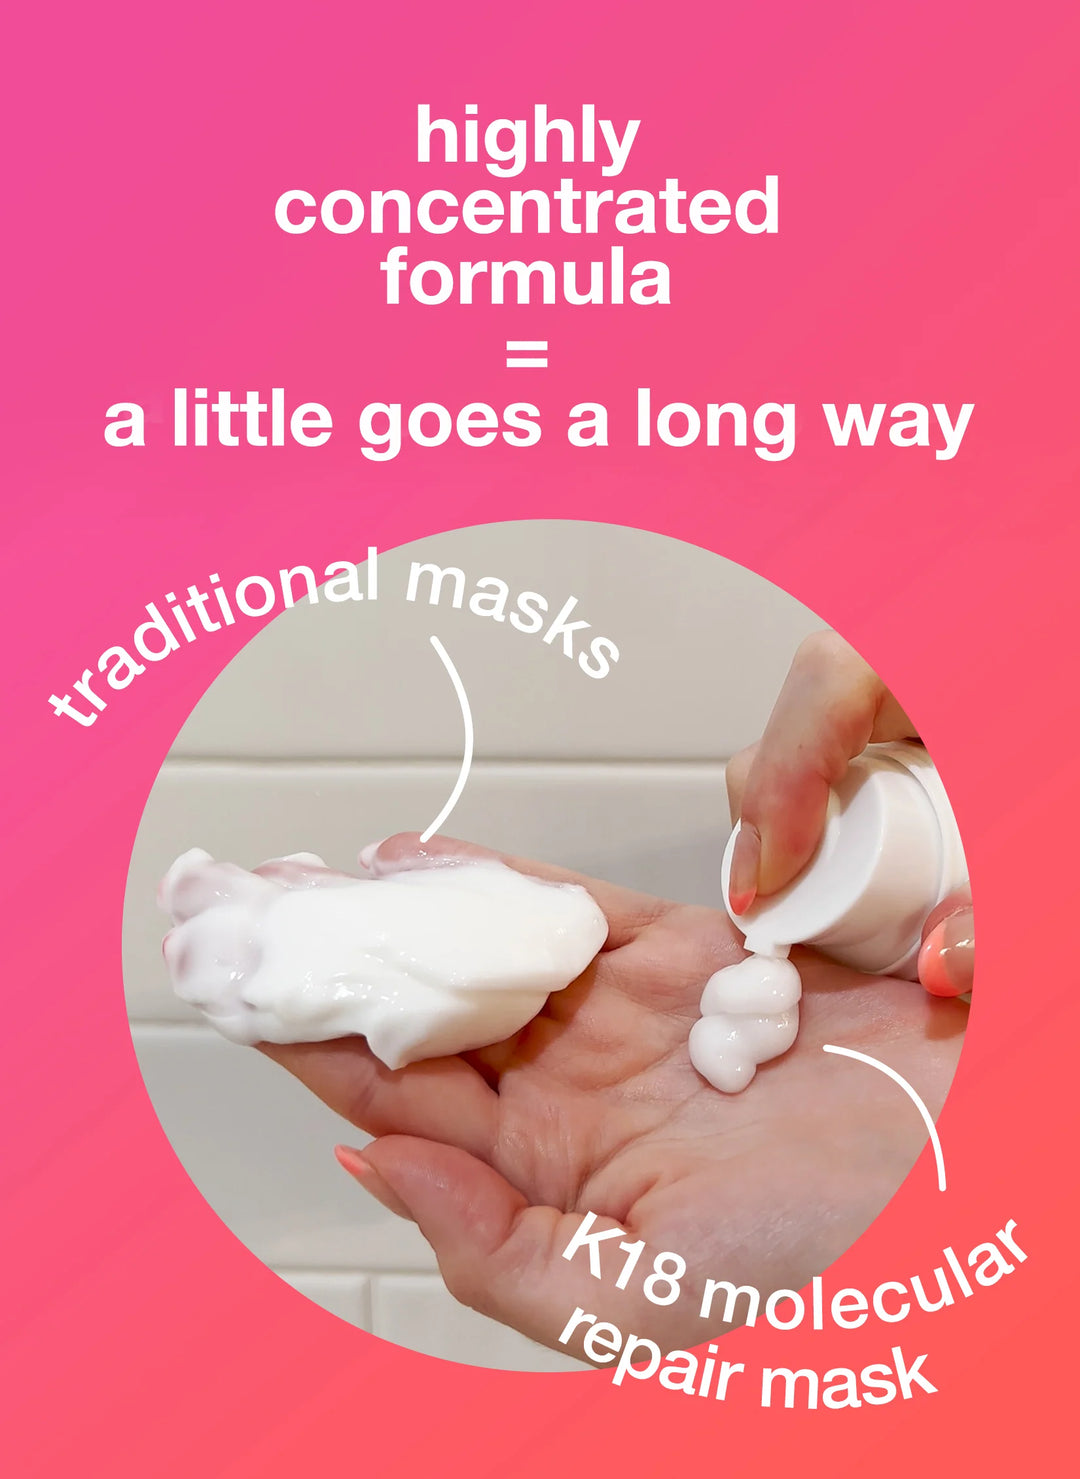 K18 Leave-In Molecular Repair Hair Mask image of product texture